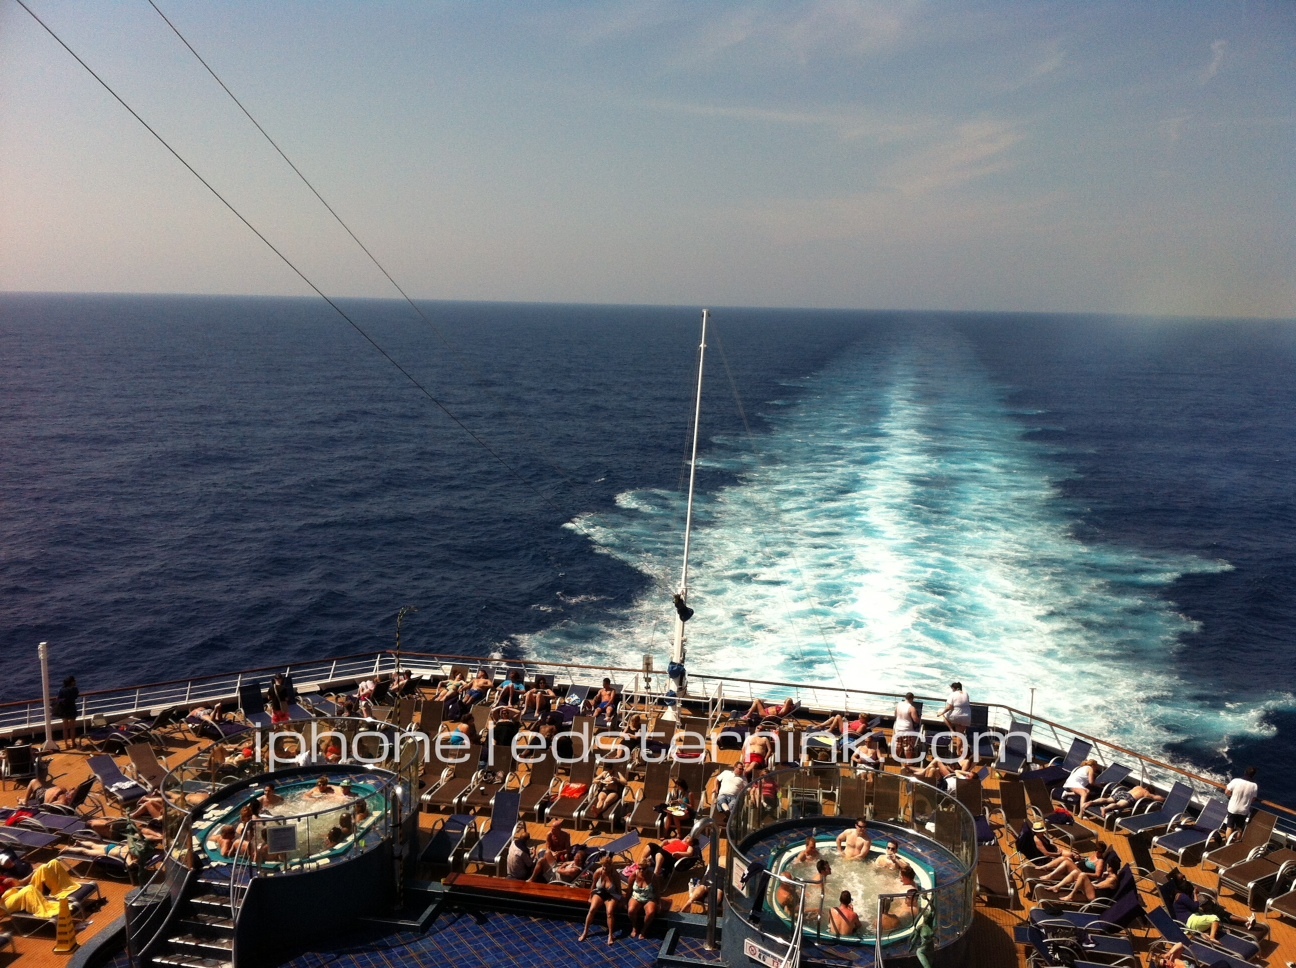 Carnival splendor ship tracker | satellite location view 